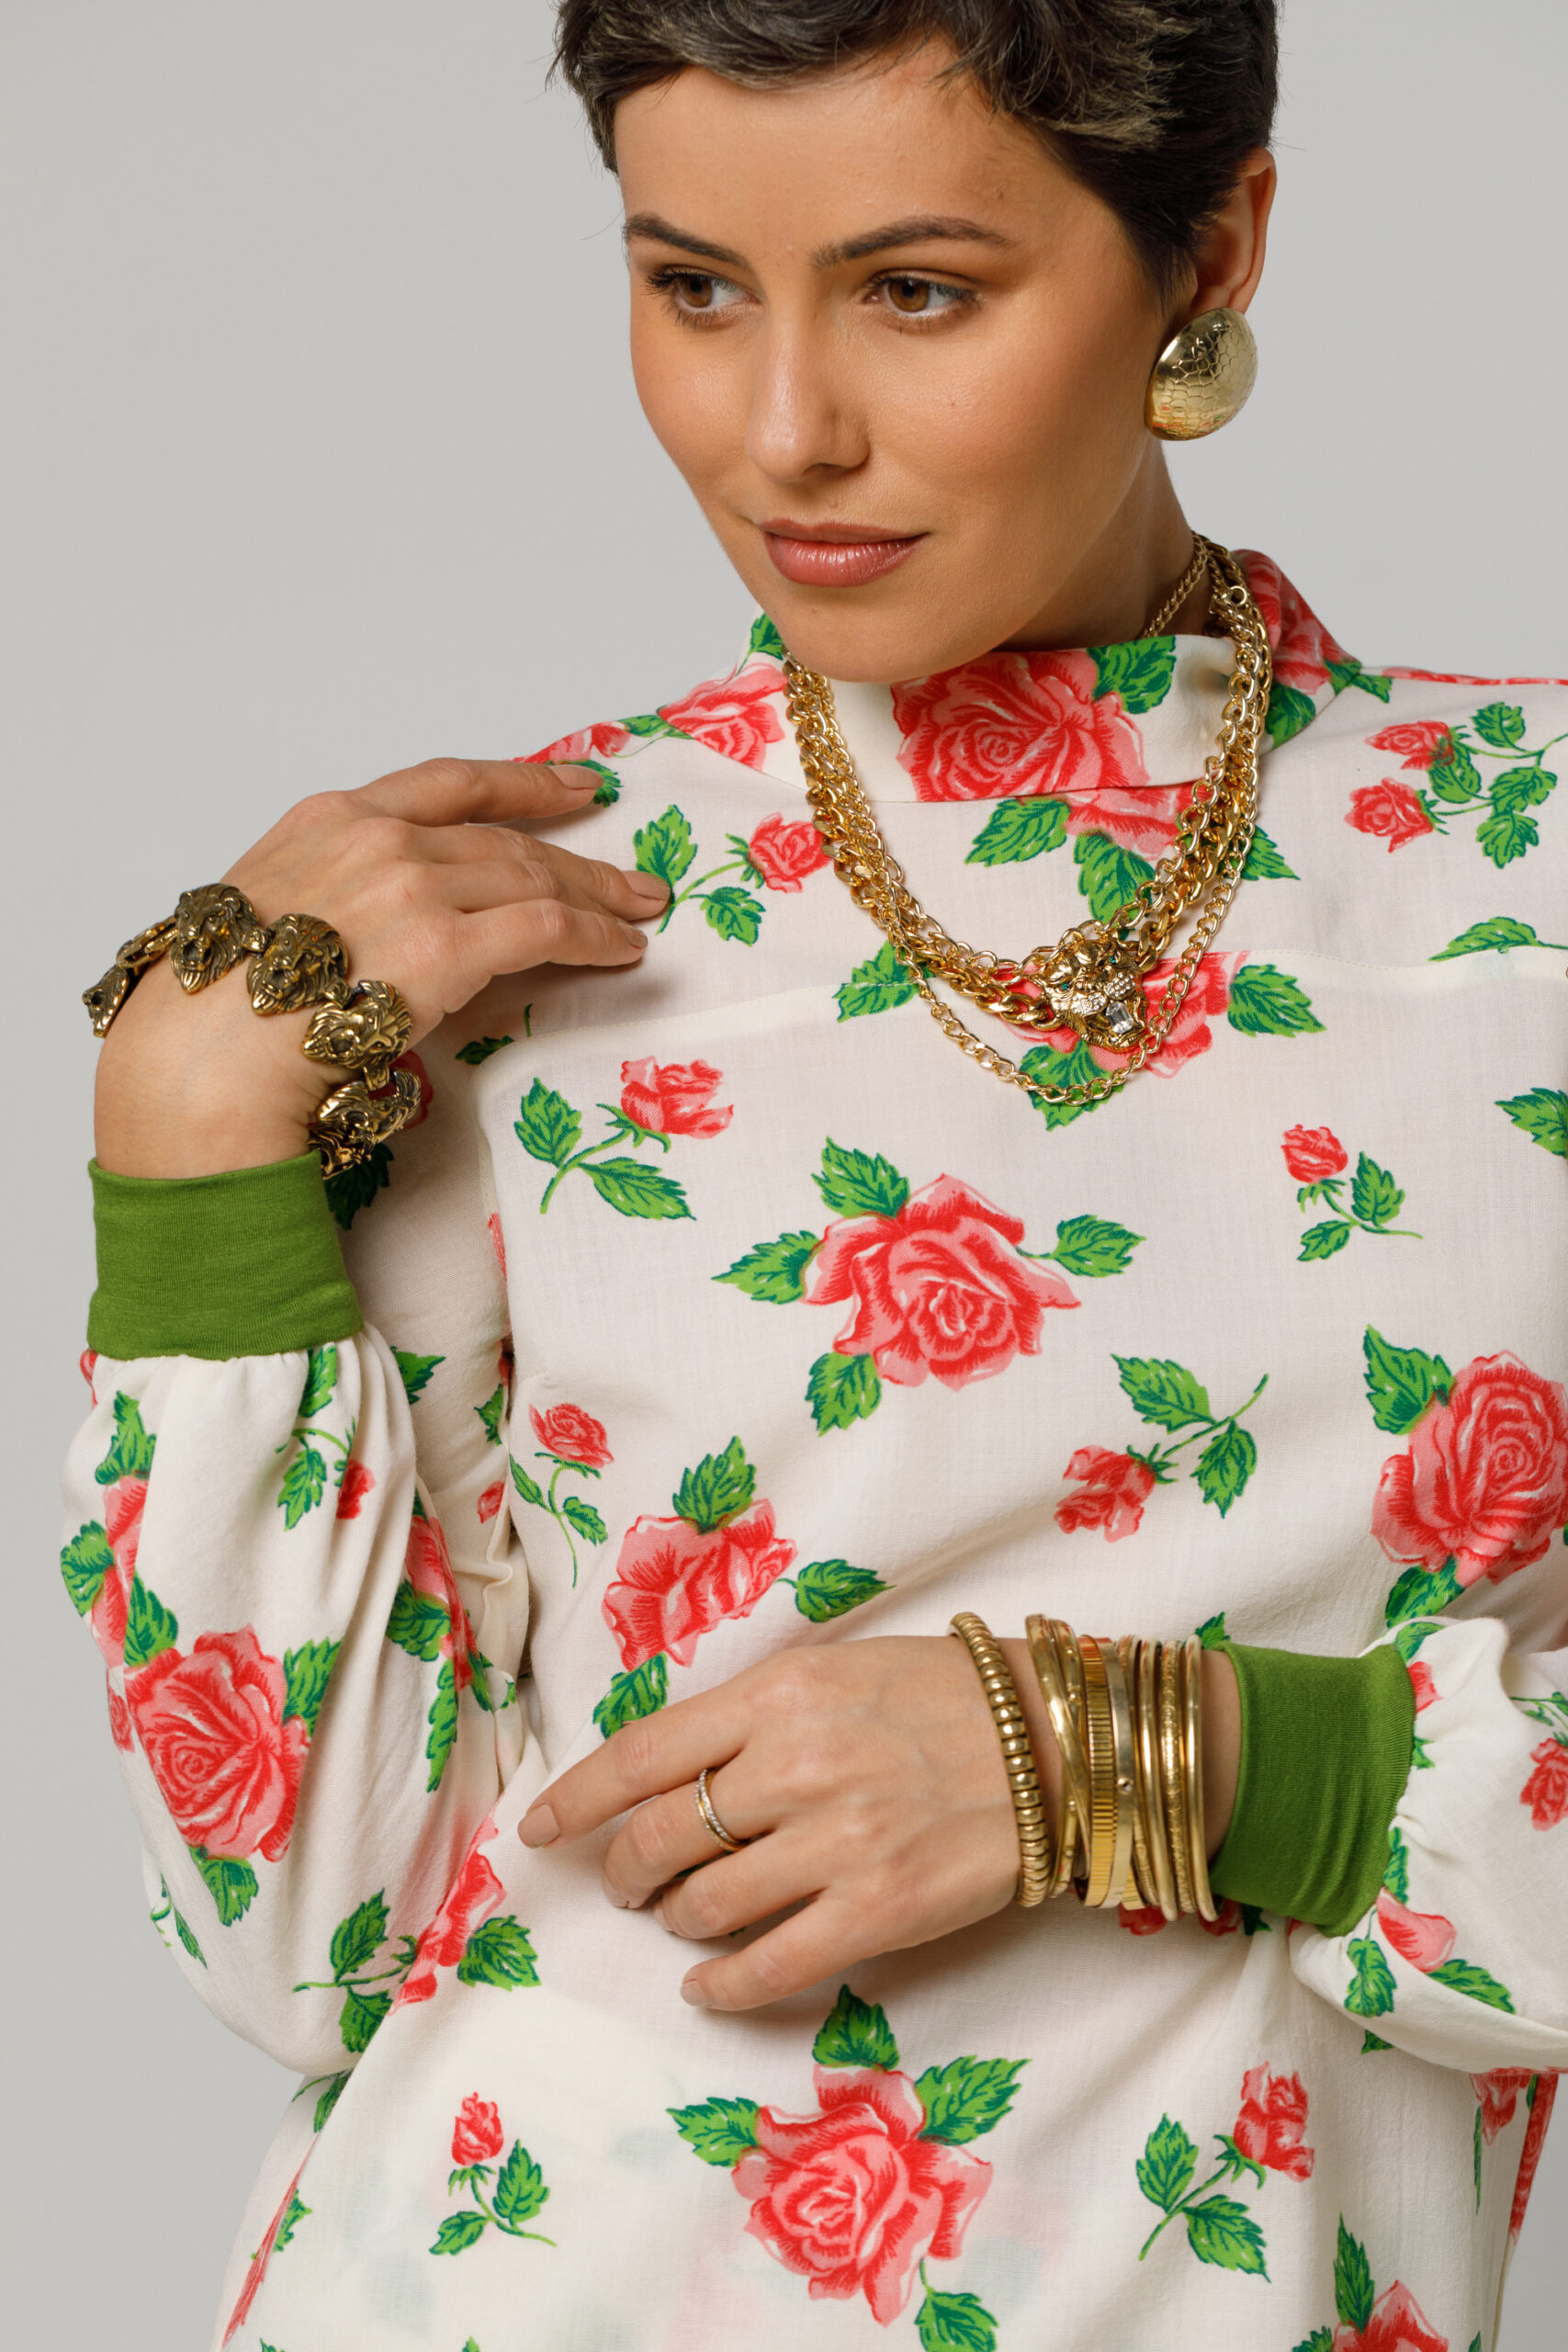 ERWIN casual floral poplin blouse. Natural fabrics, original design, handmade embroidery